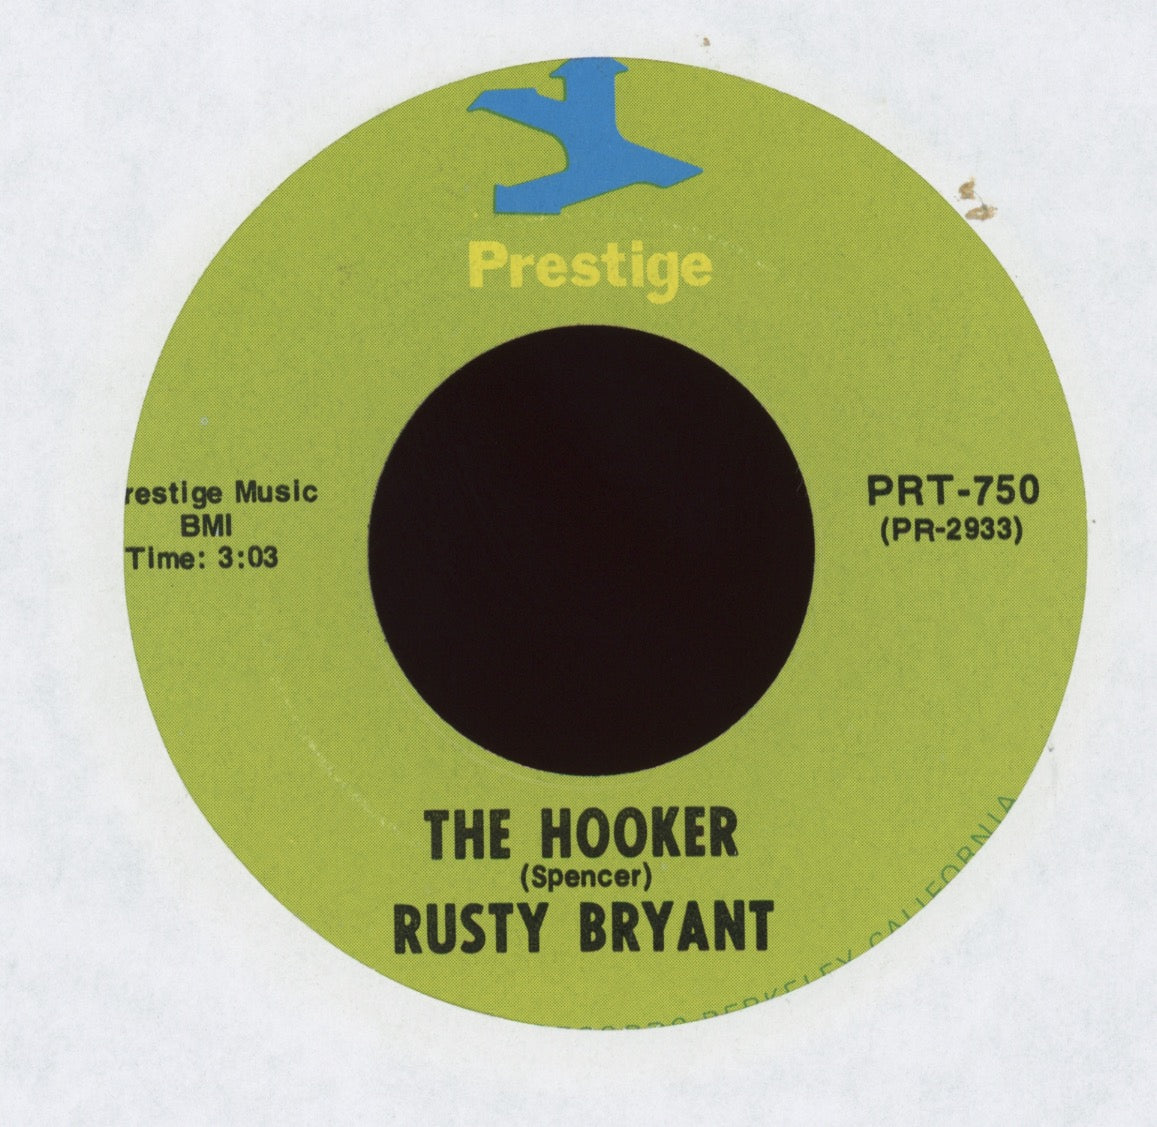 Rusty Bryant - Fire Eater on Prestige